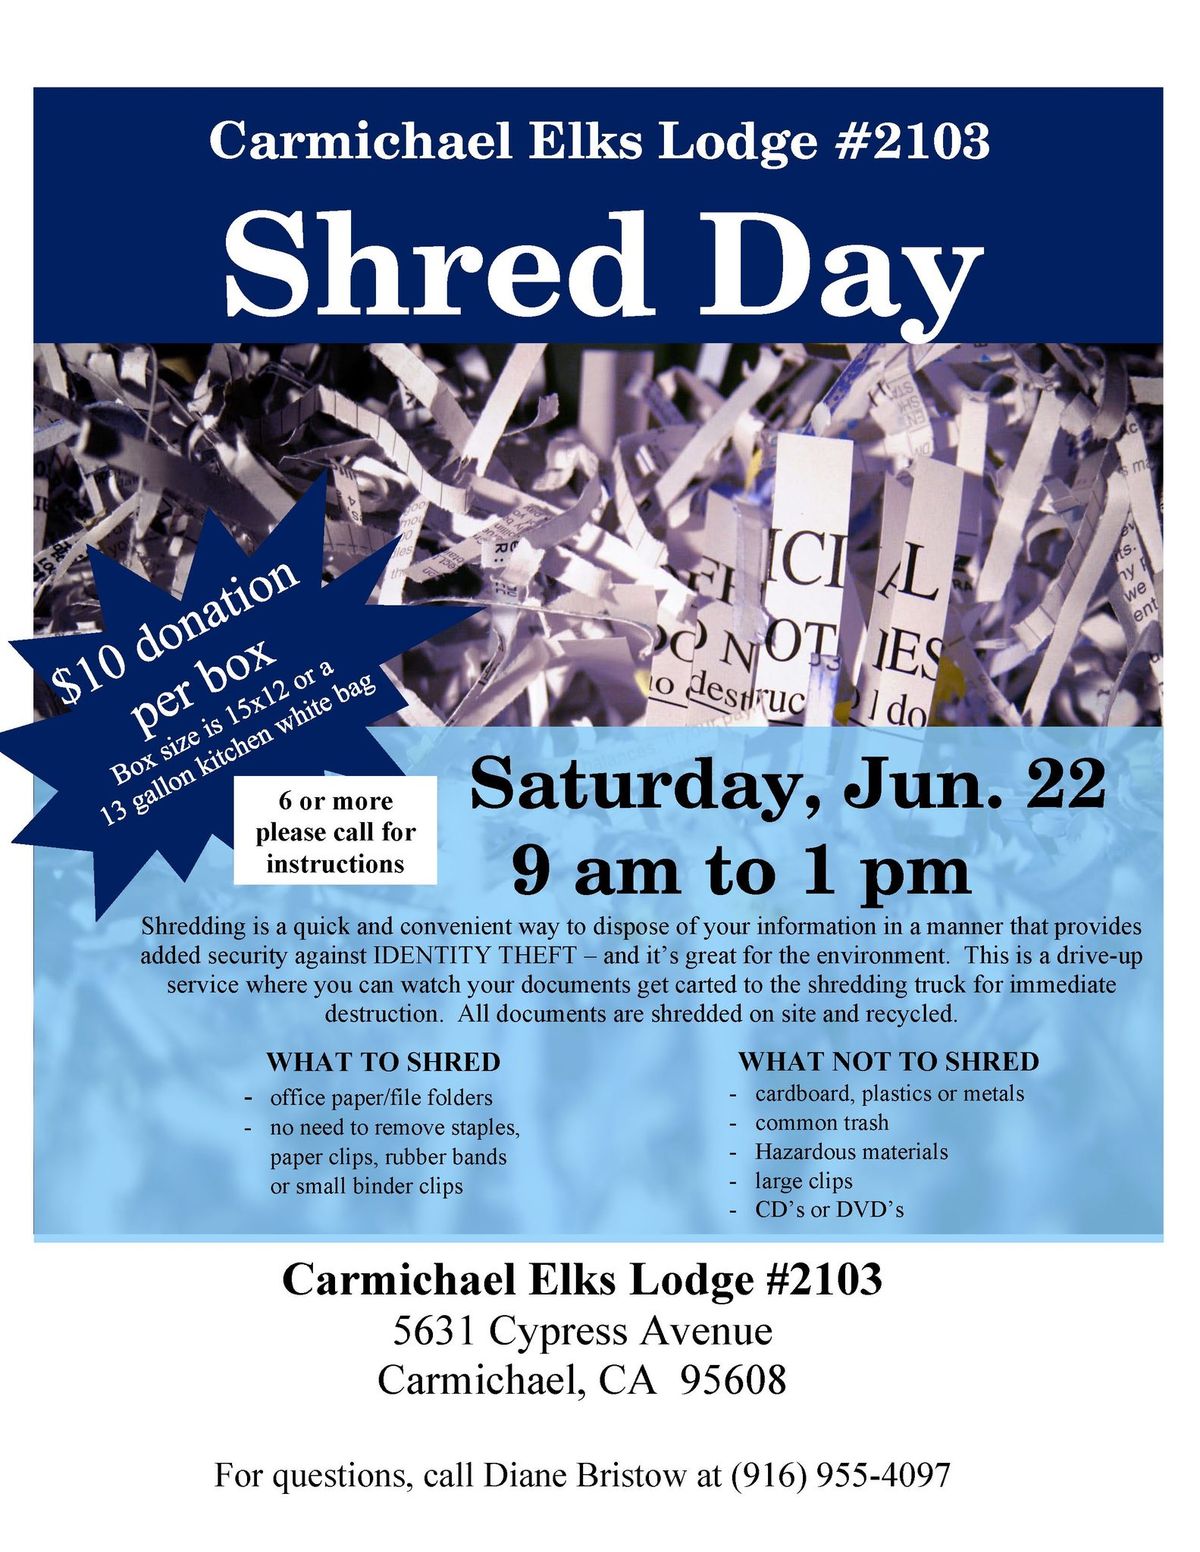 Carmichael Elks Shred Event